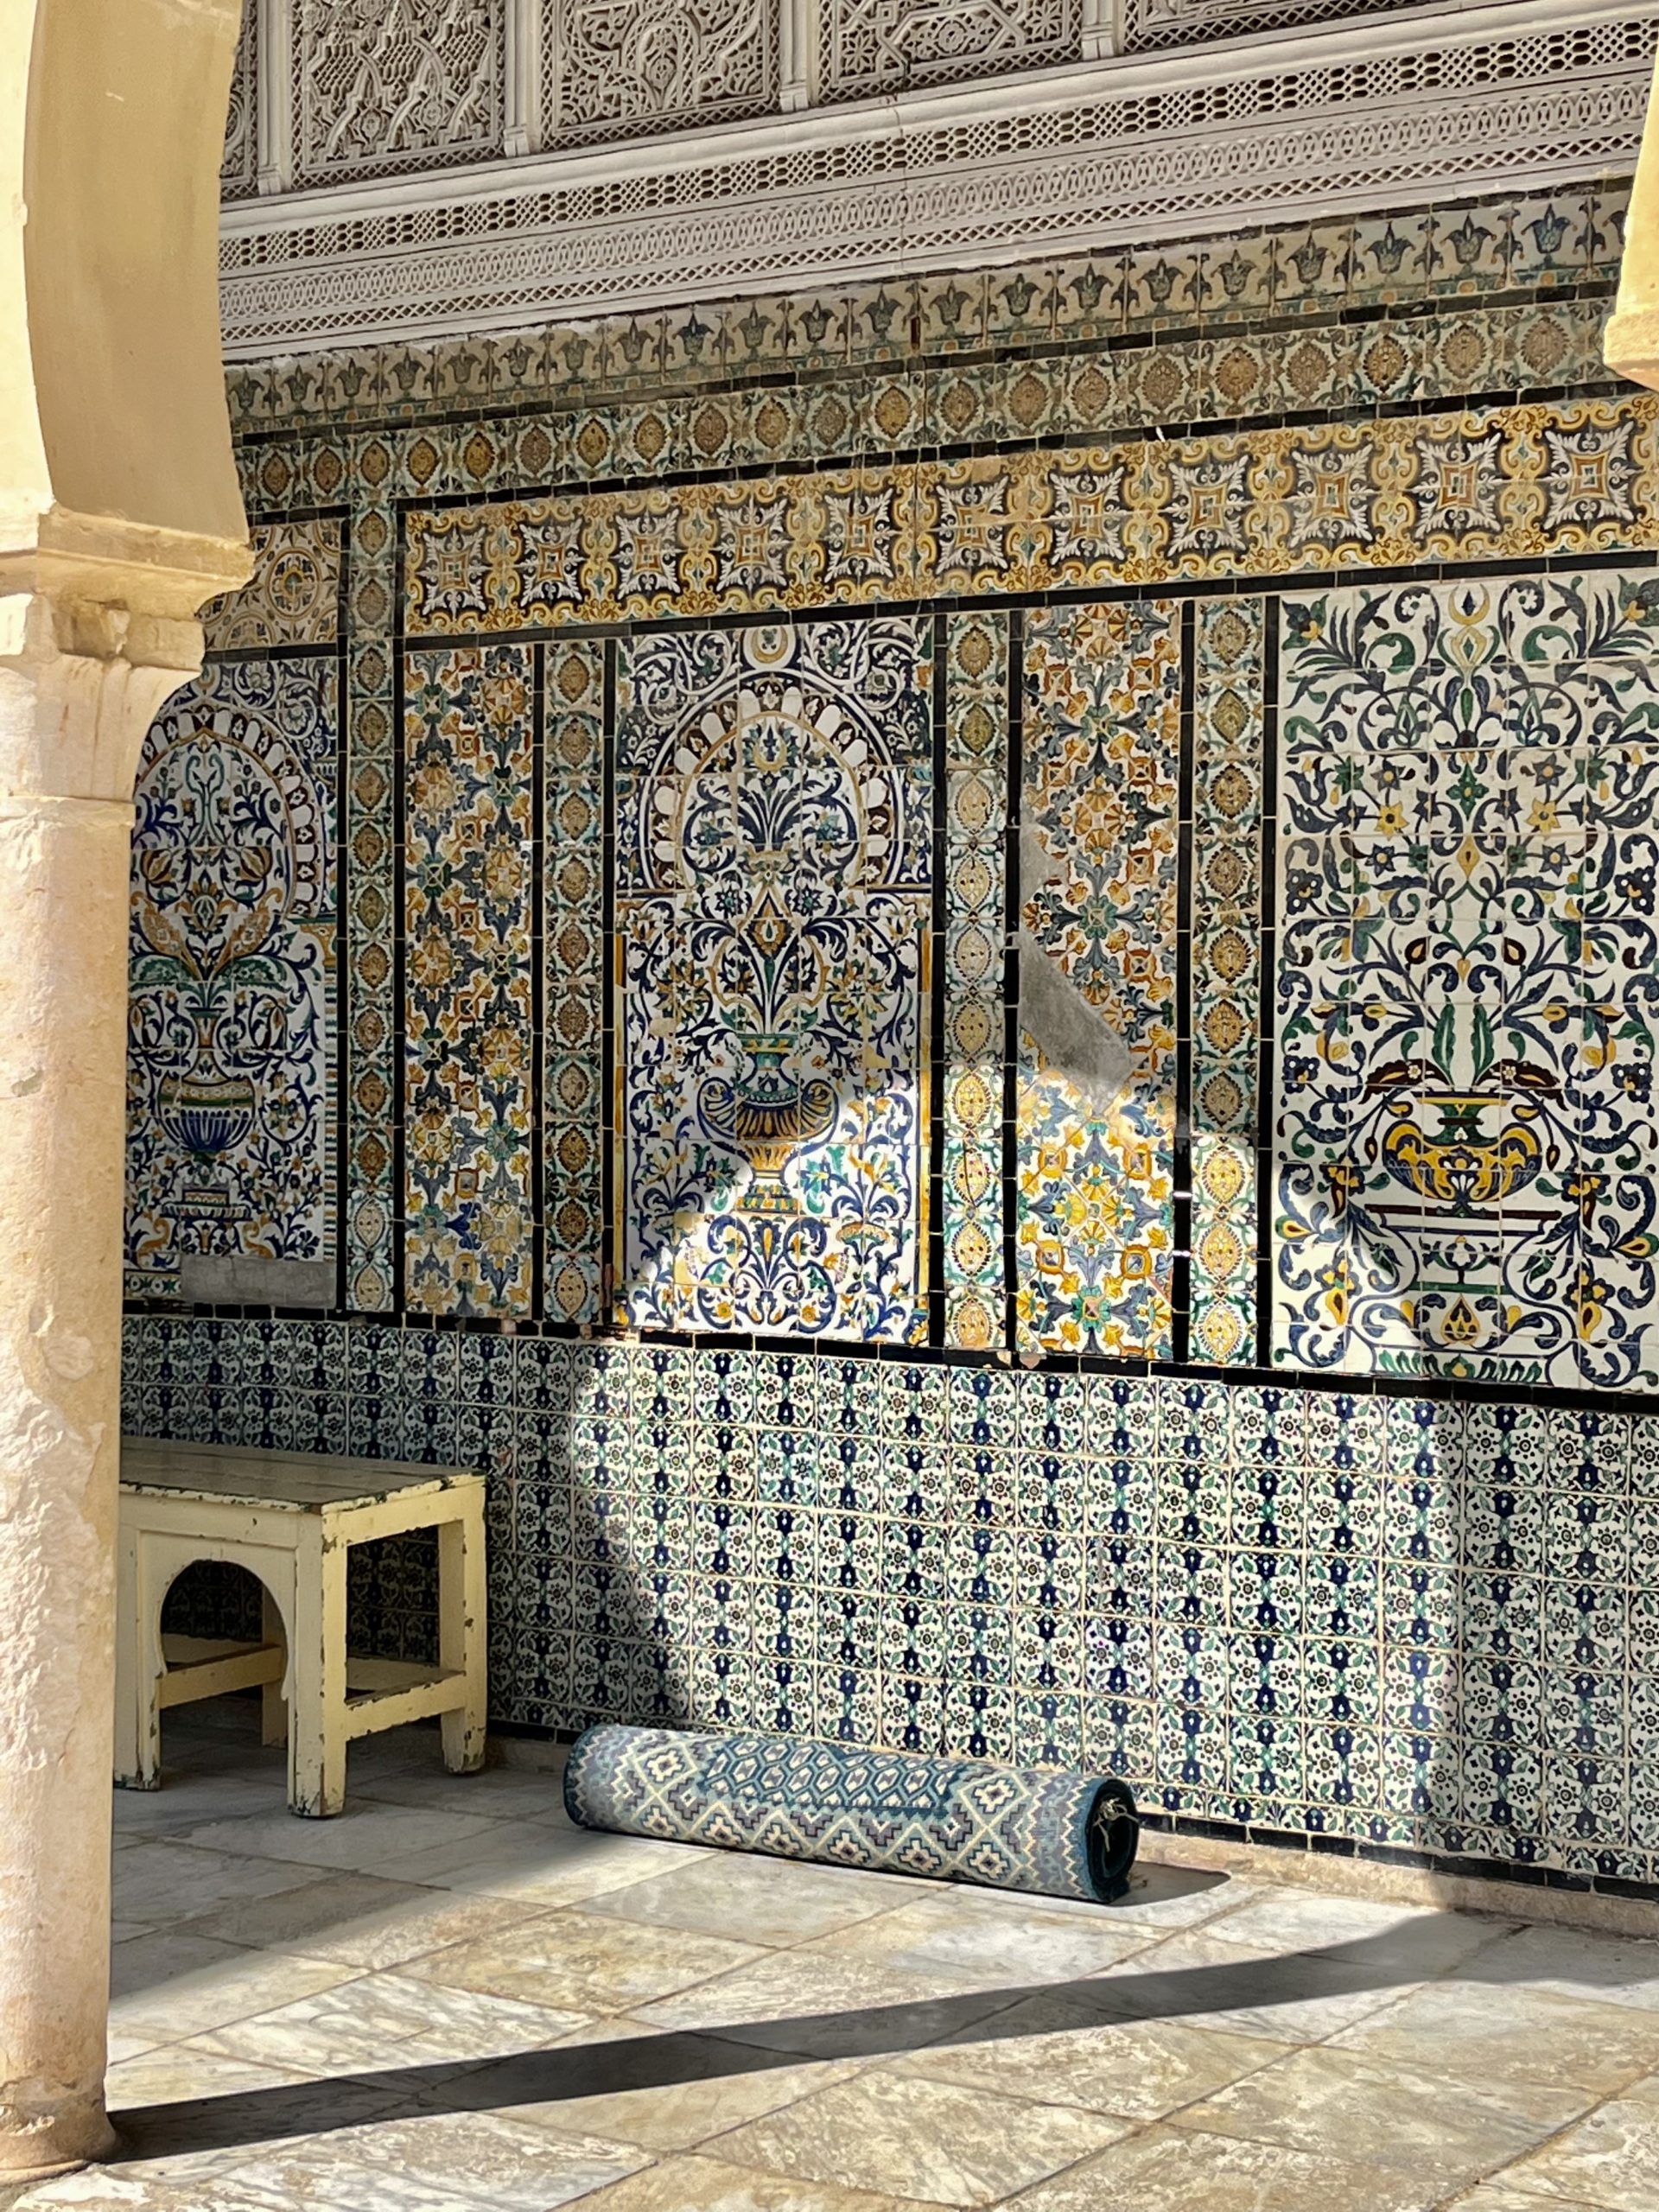 Meanderings in the Medina of Kairouan, Tunisia.